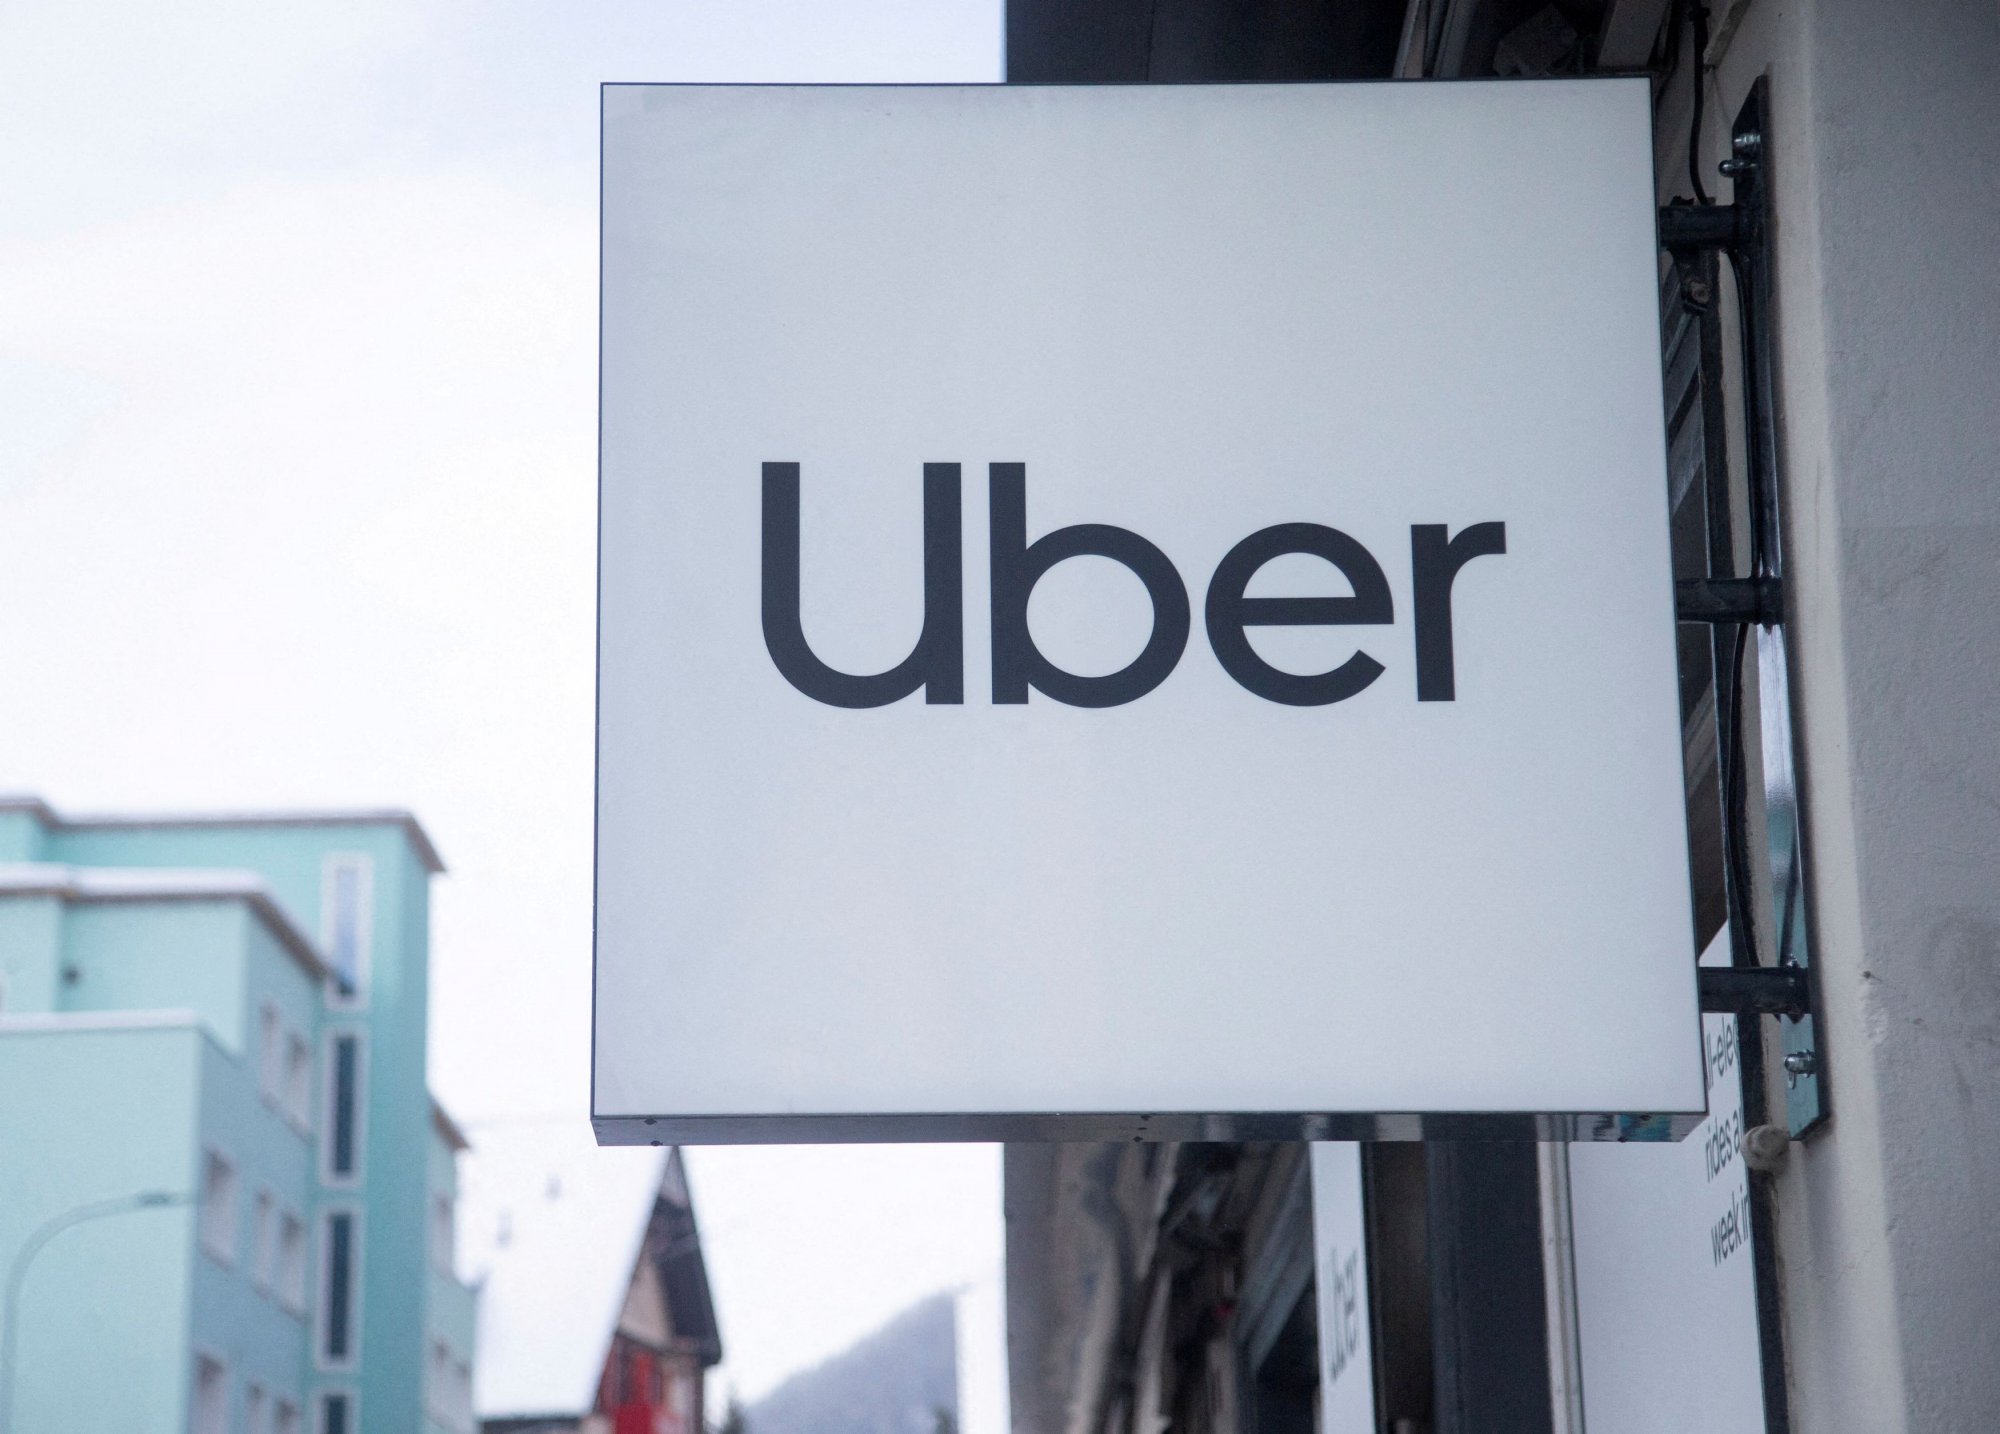 Uber: Οι προτάσεις της Ε.Ε. απειλούν τη βιωσιμότητα παραρτημάτων στην Ευρώπη